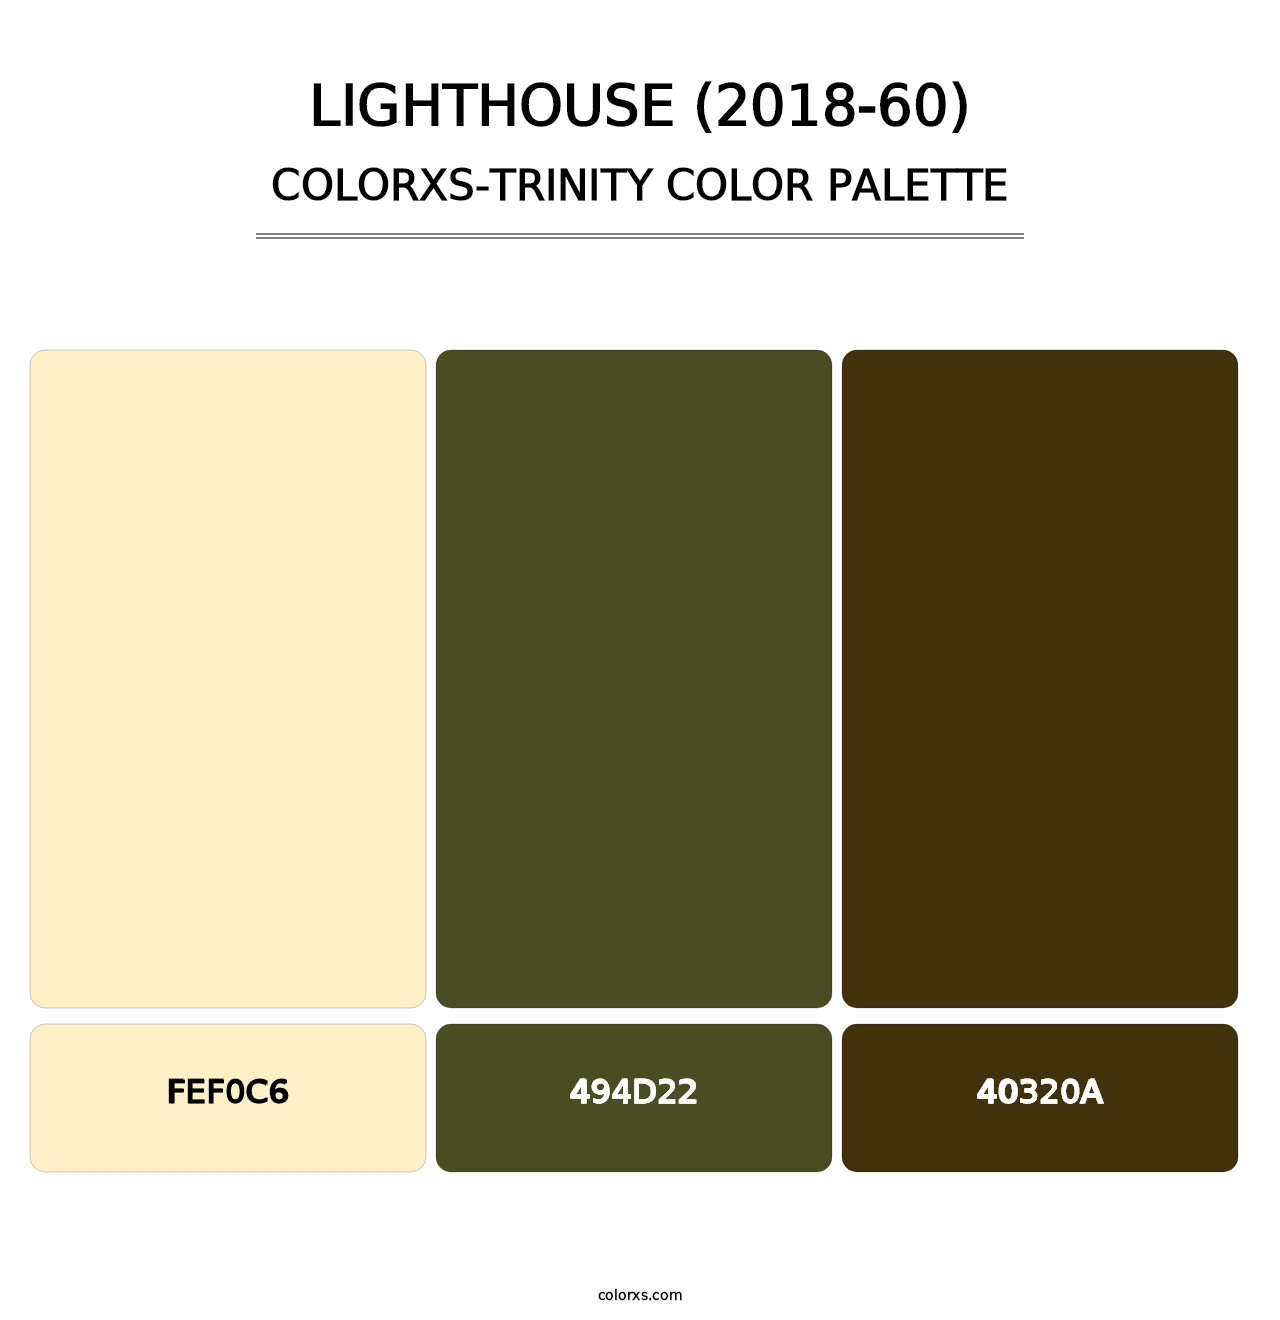 Lighthouse (2018-60) - Colorxs Trinity Palette